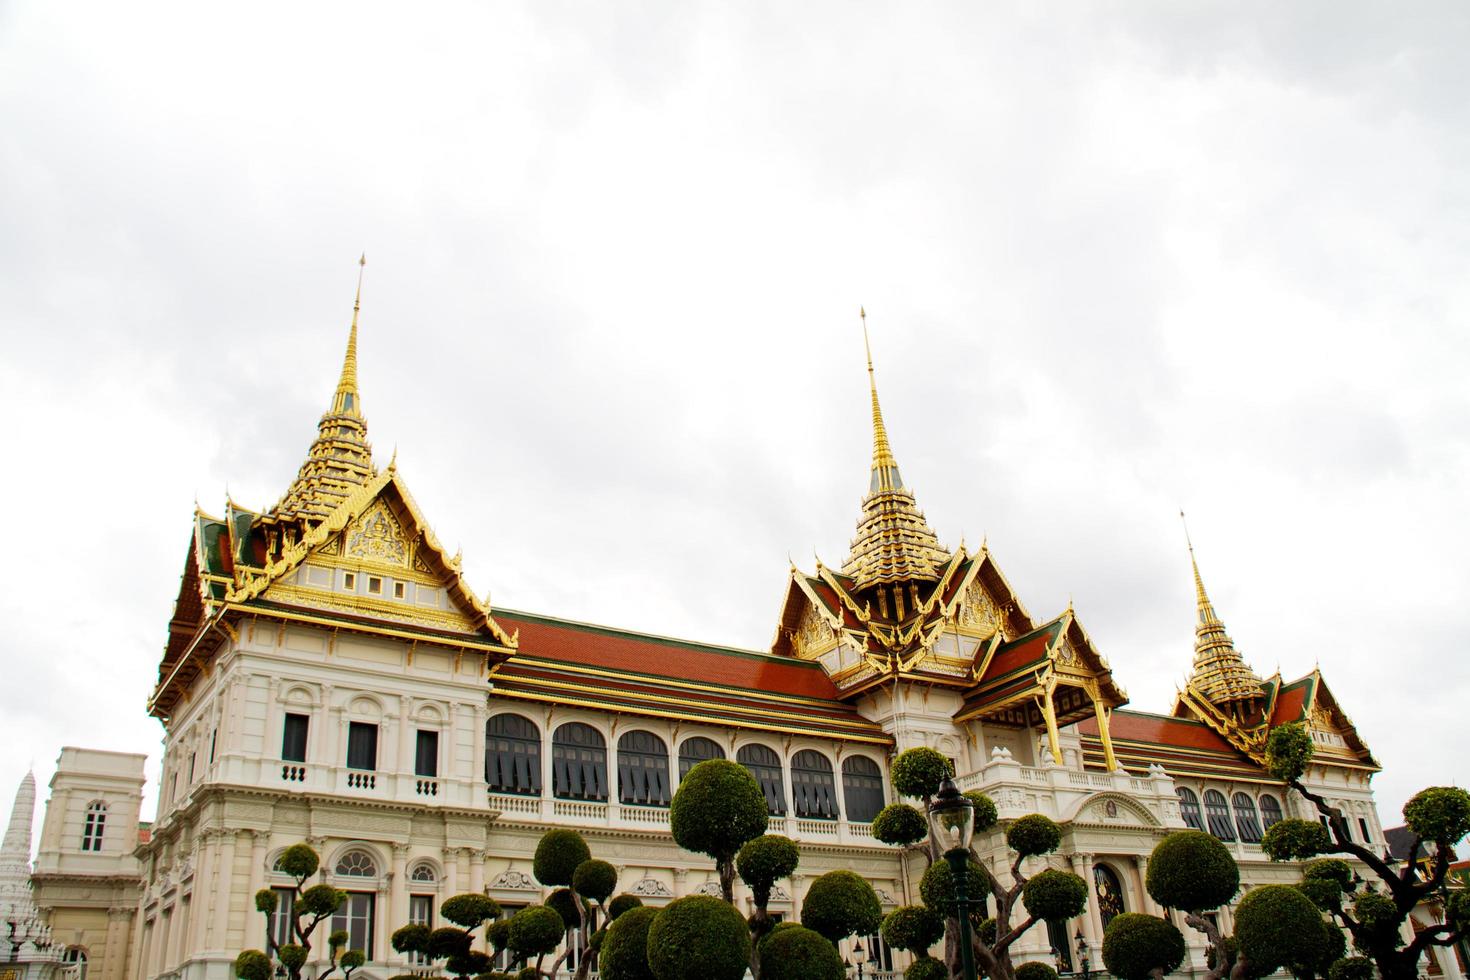 detail van groots paleis in bangkok, thailand foto